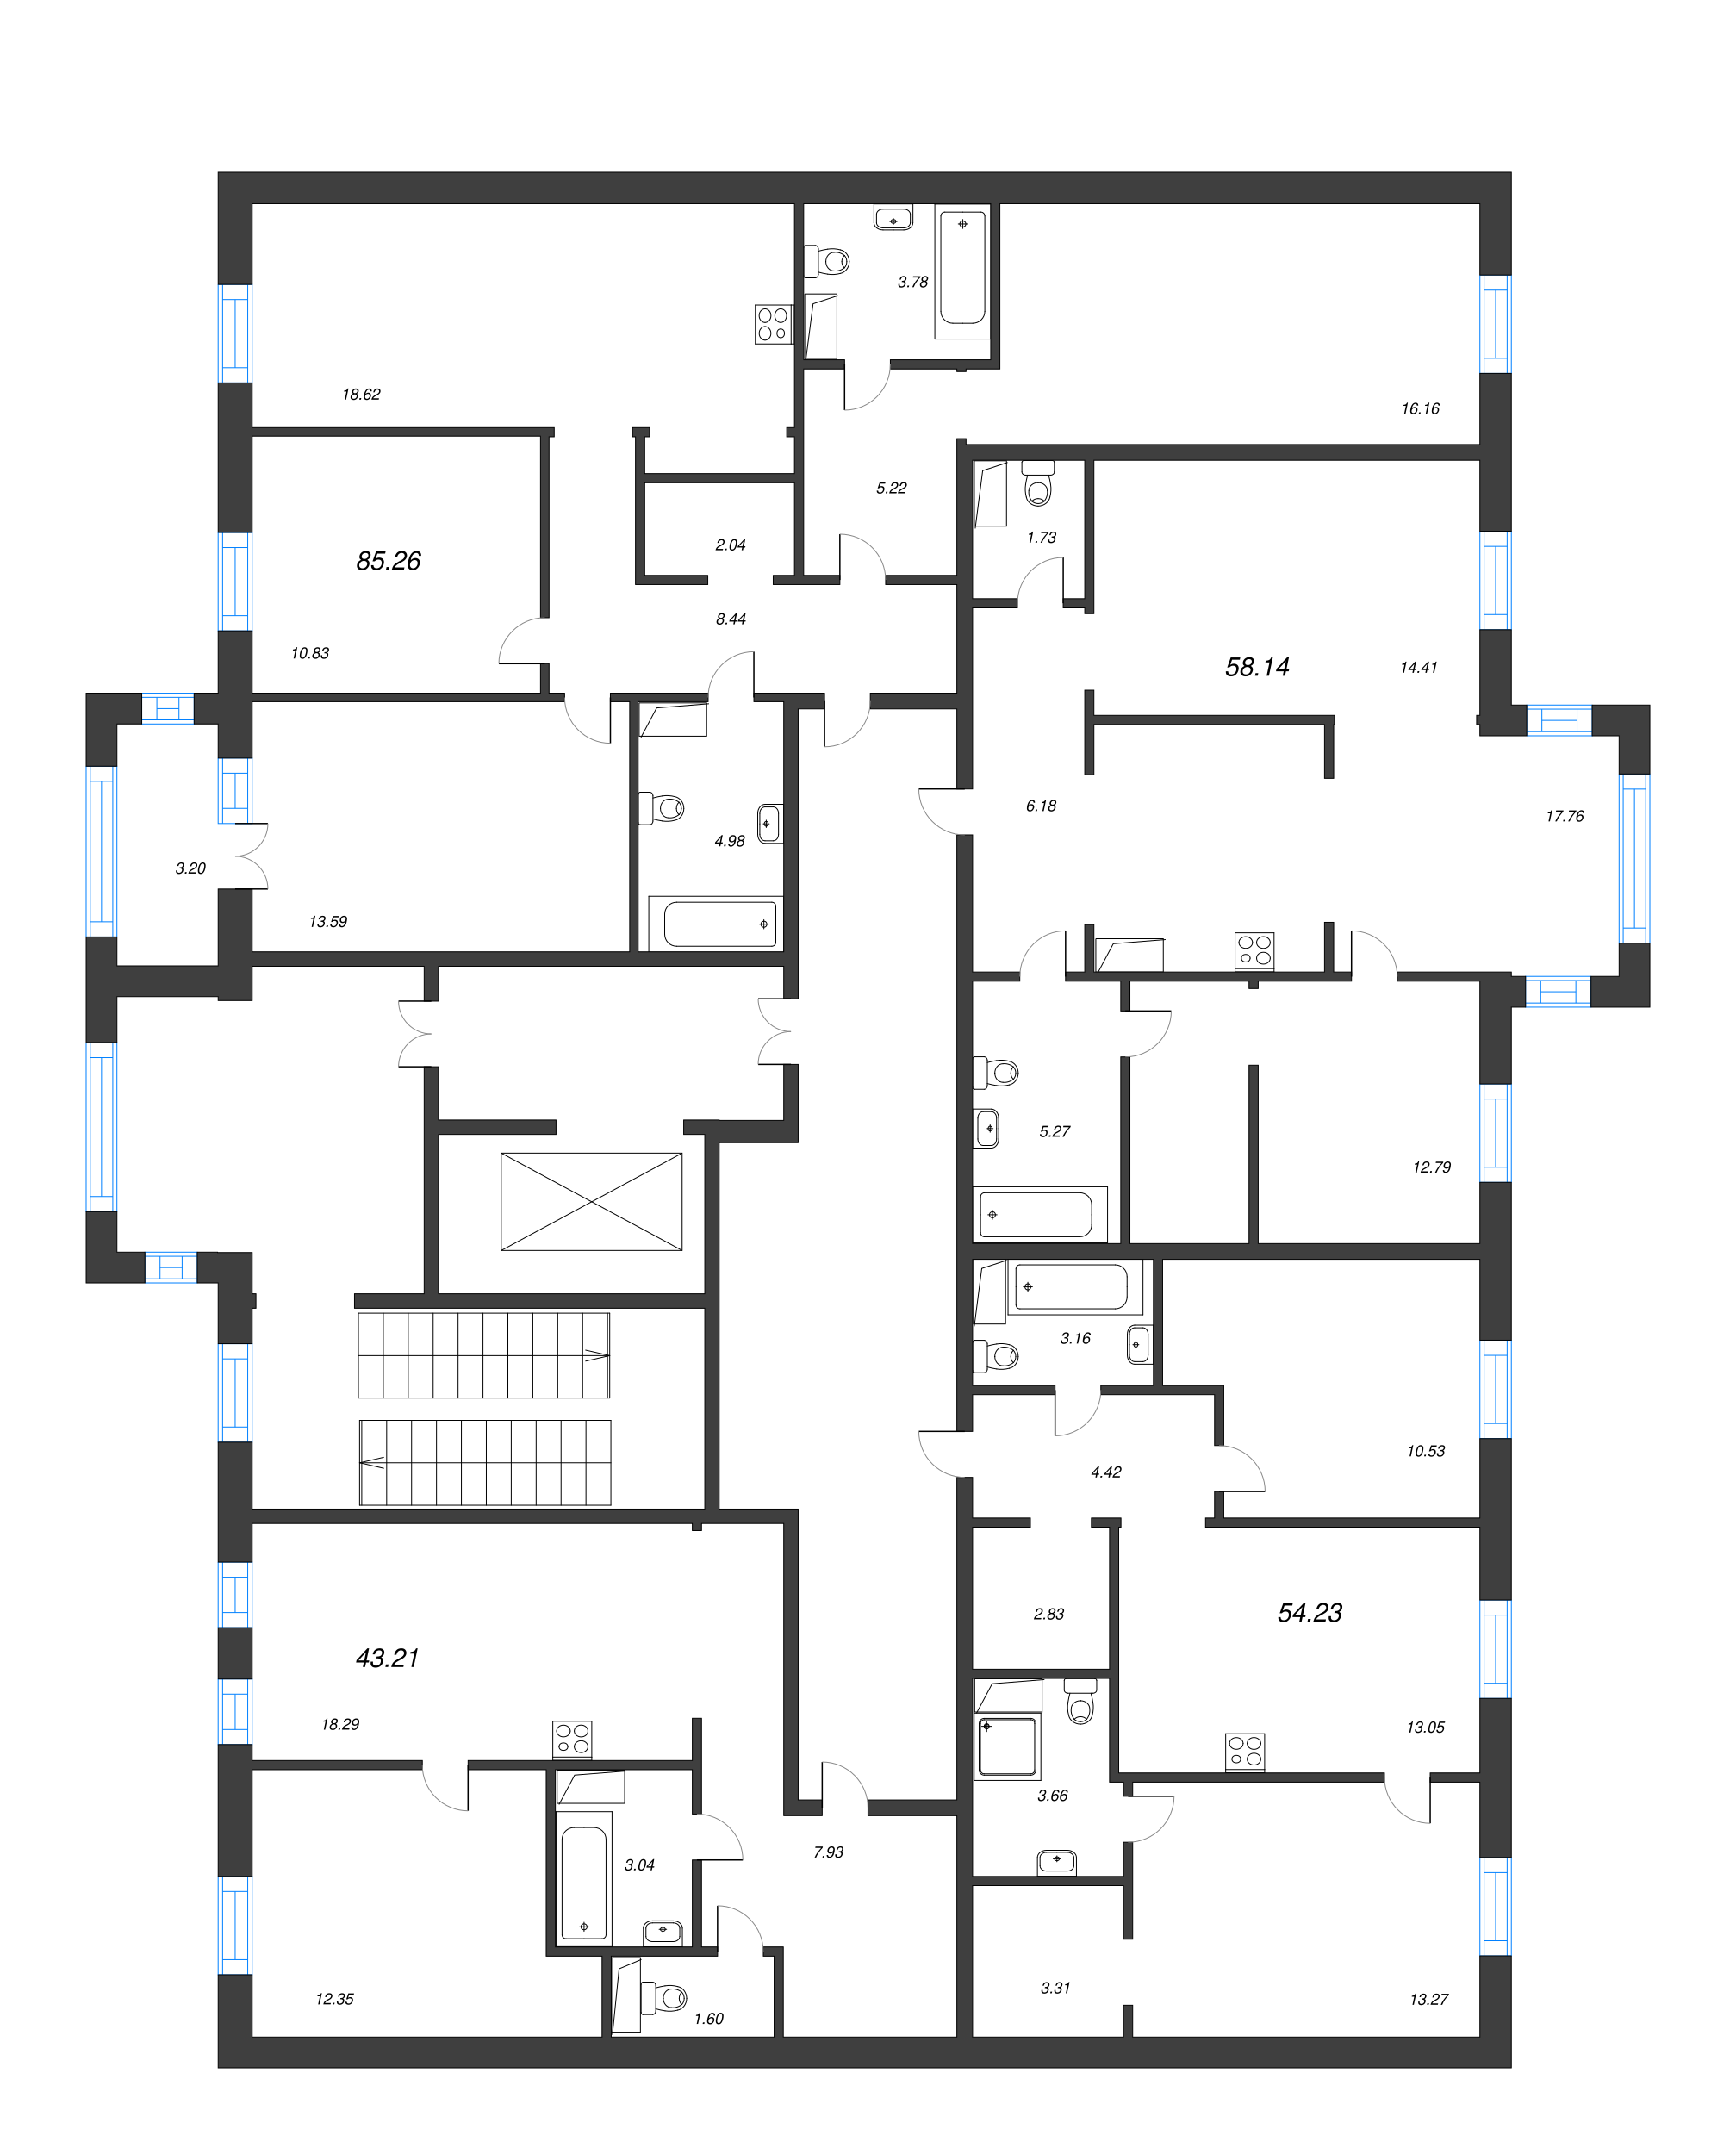 4-комнатная (Евро) квартира, 85.26 м² - планировка этажа